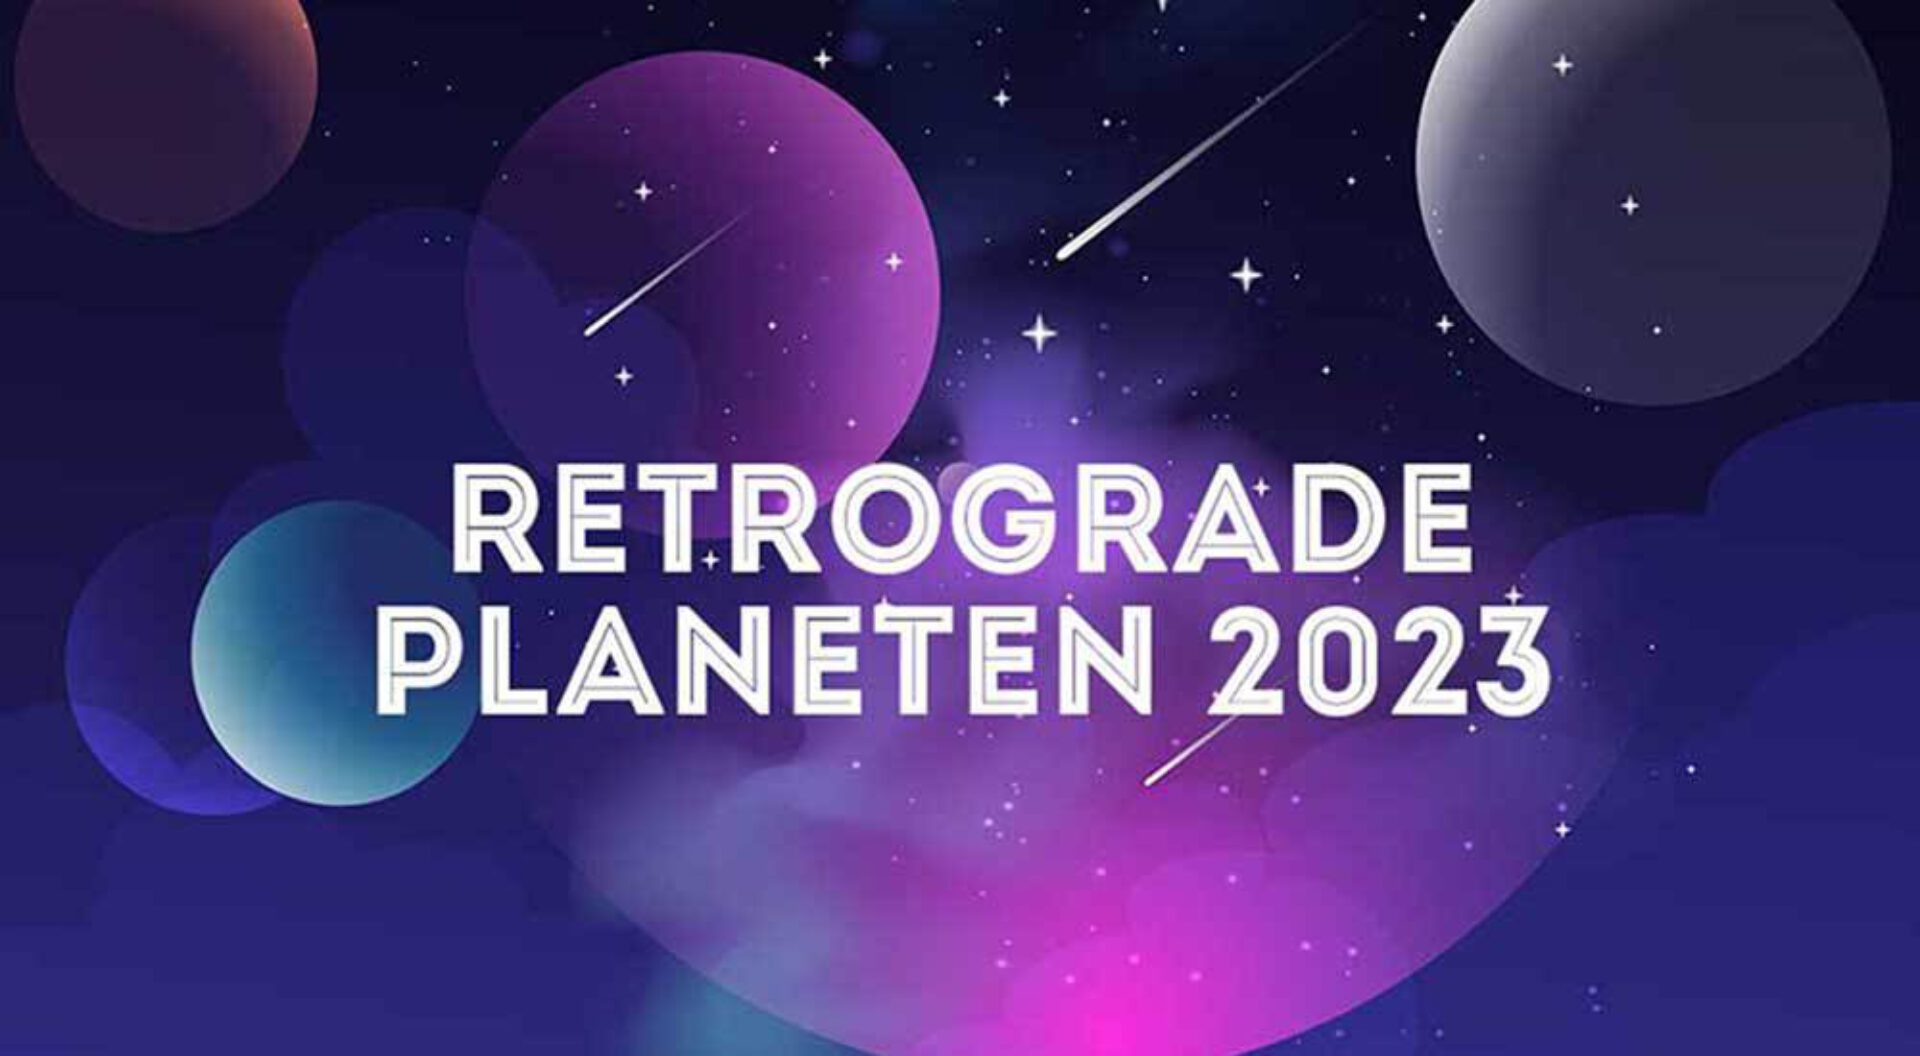 Retrograde planeten 2023